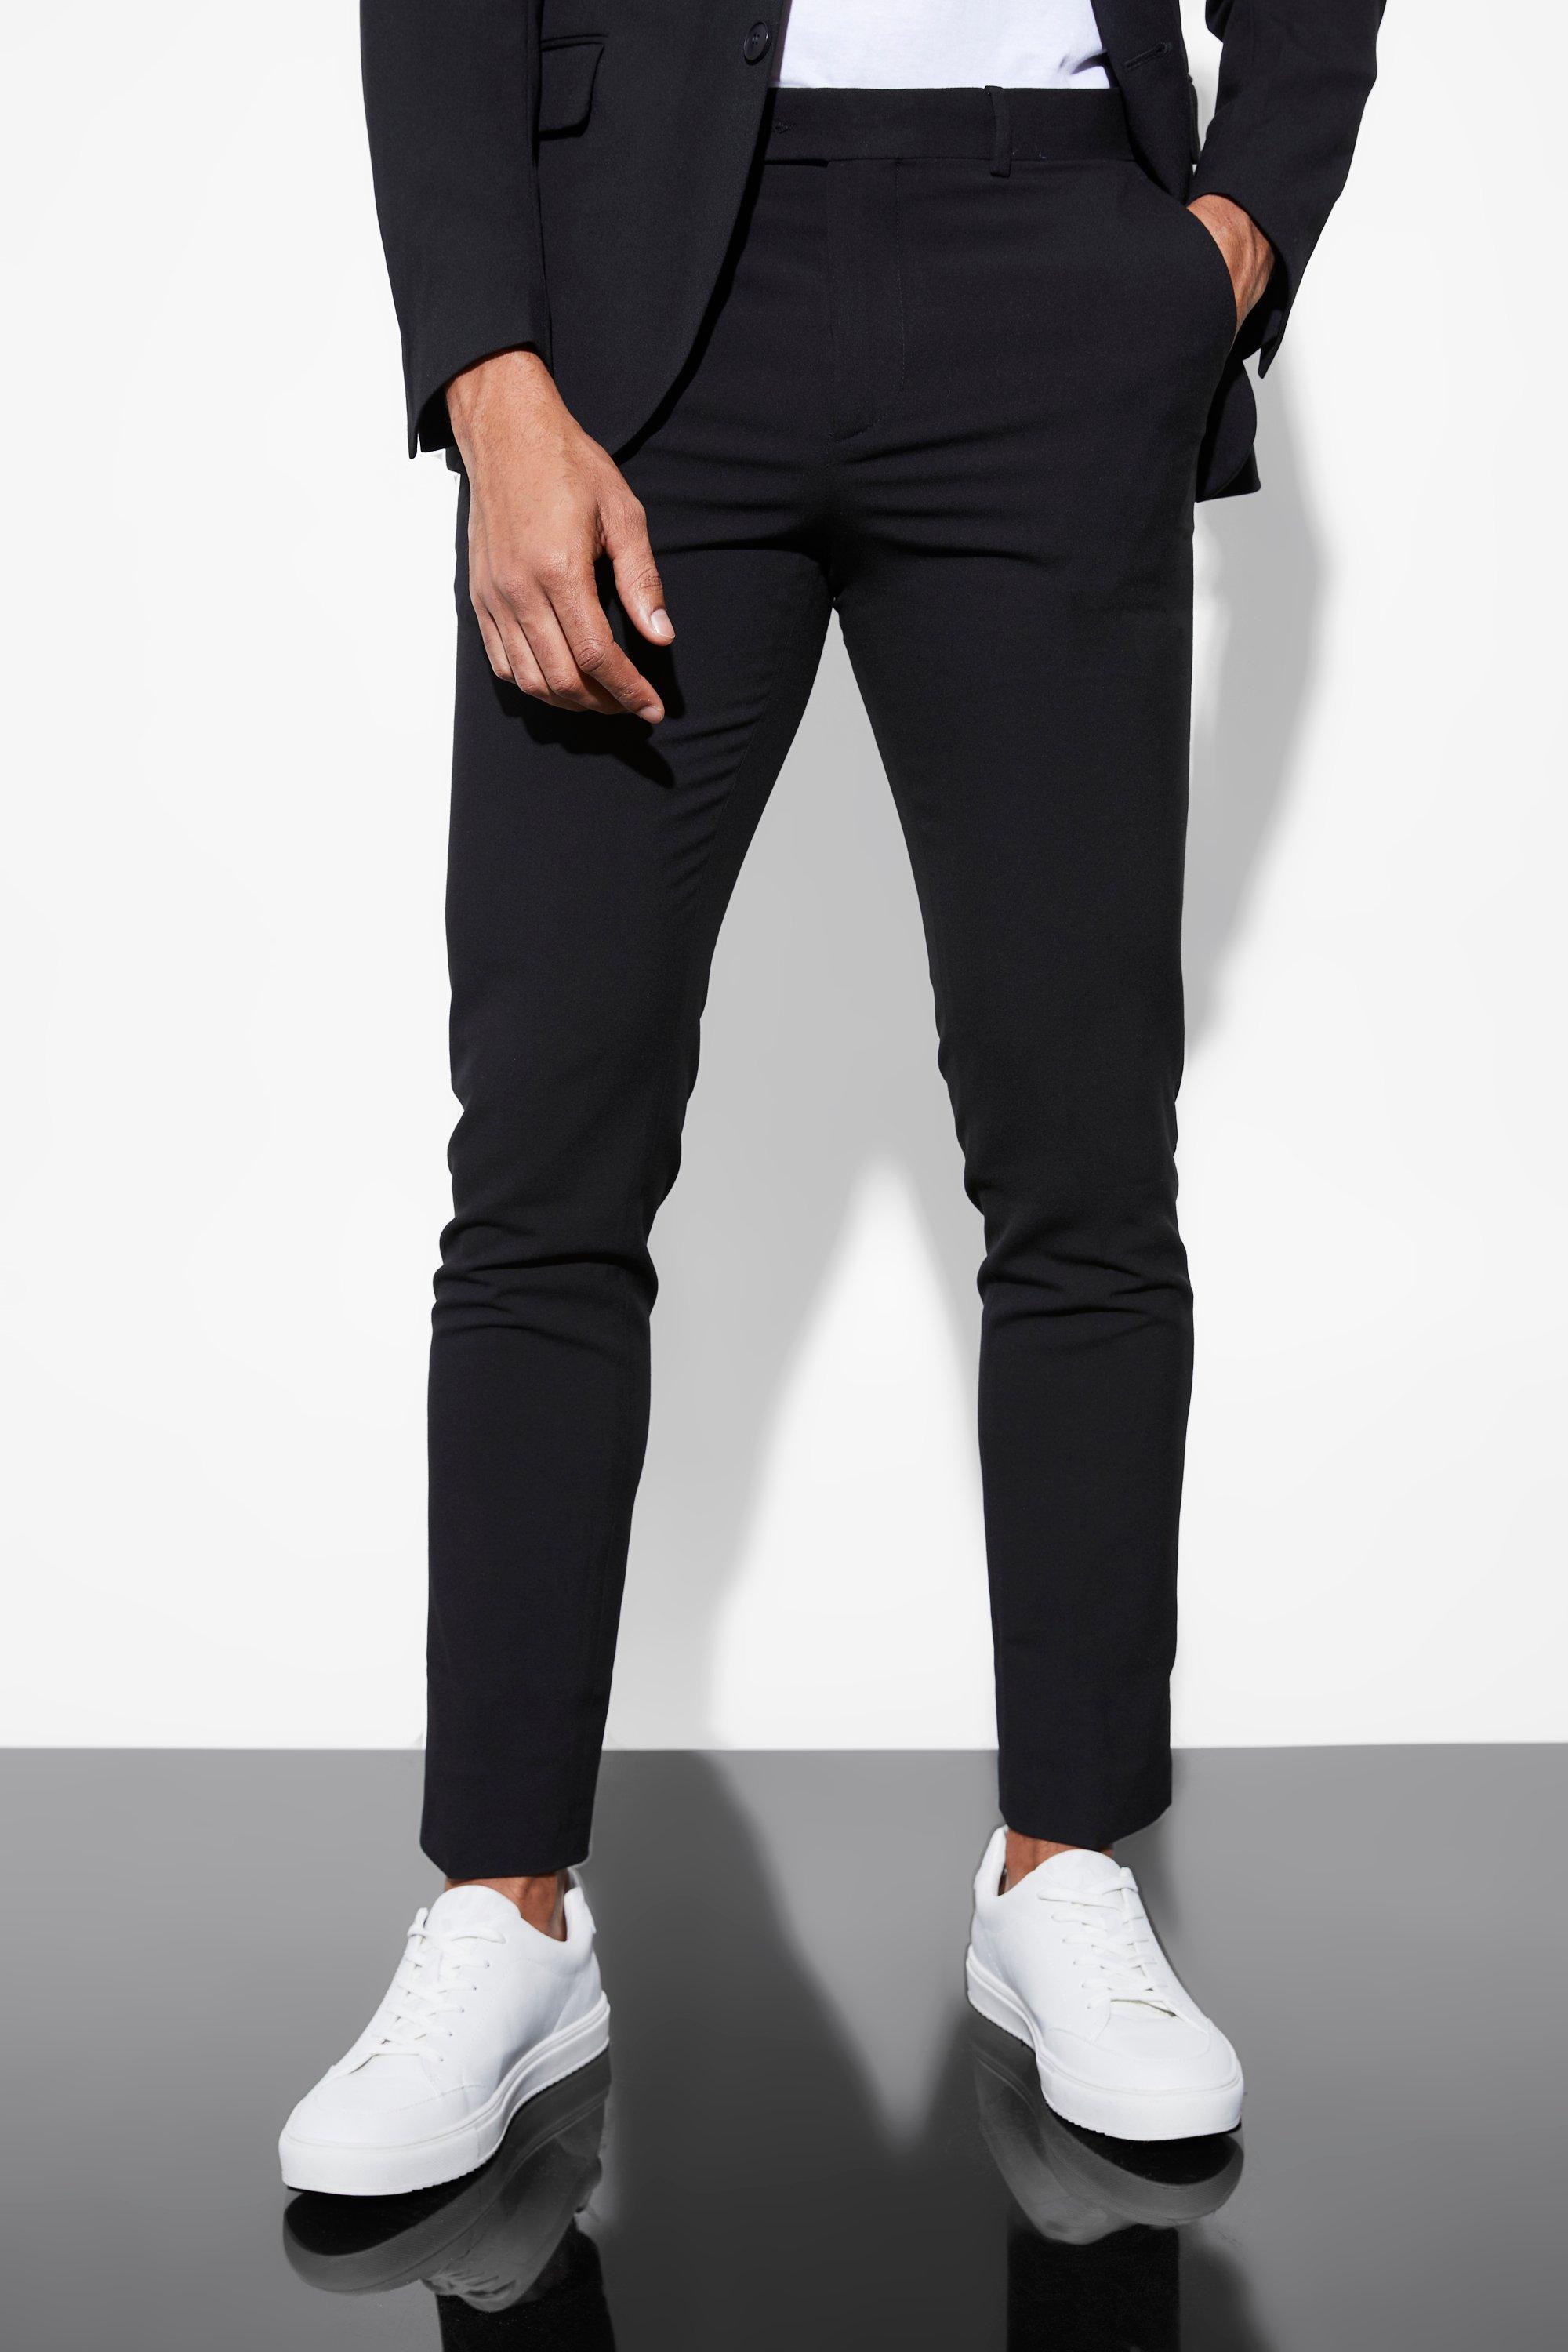 Msscreation Slim Fit Men Black Trousers - Buy Msscreation Slim Fit